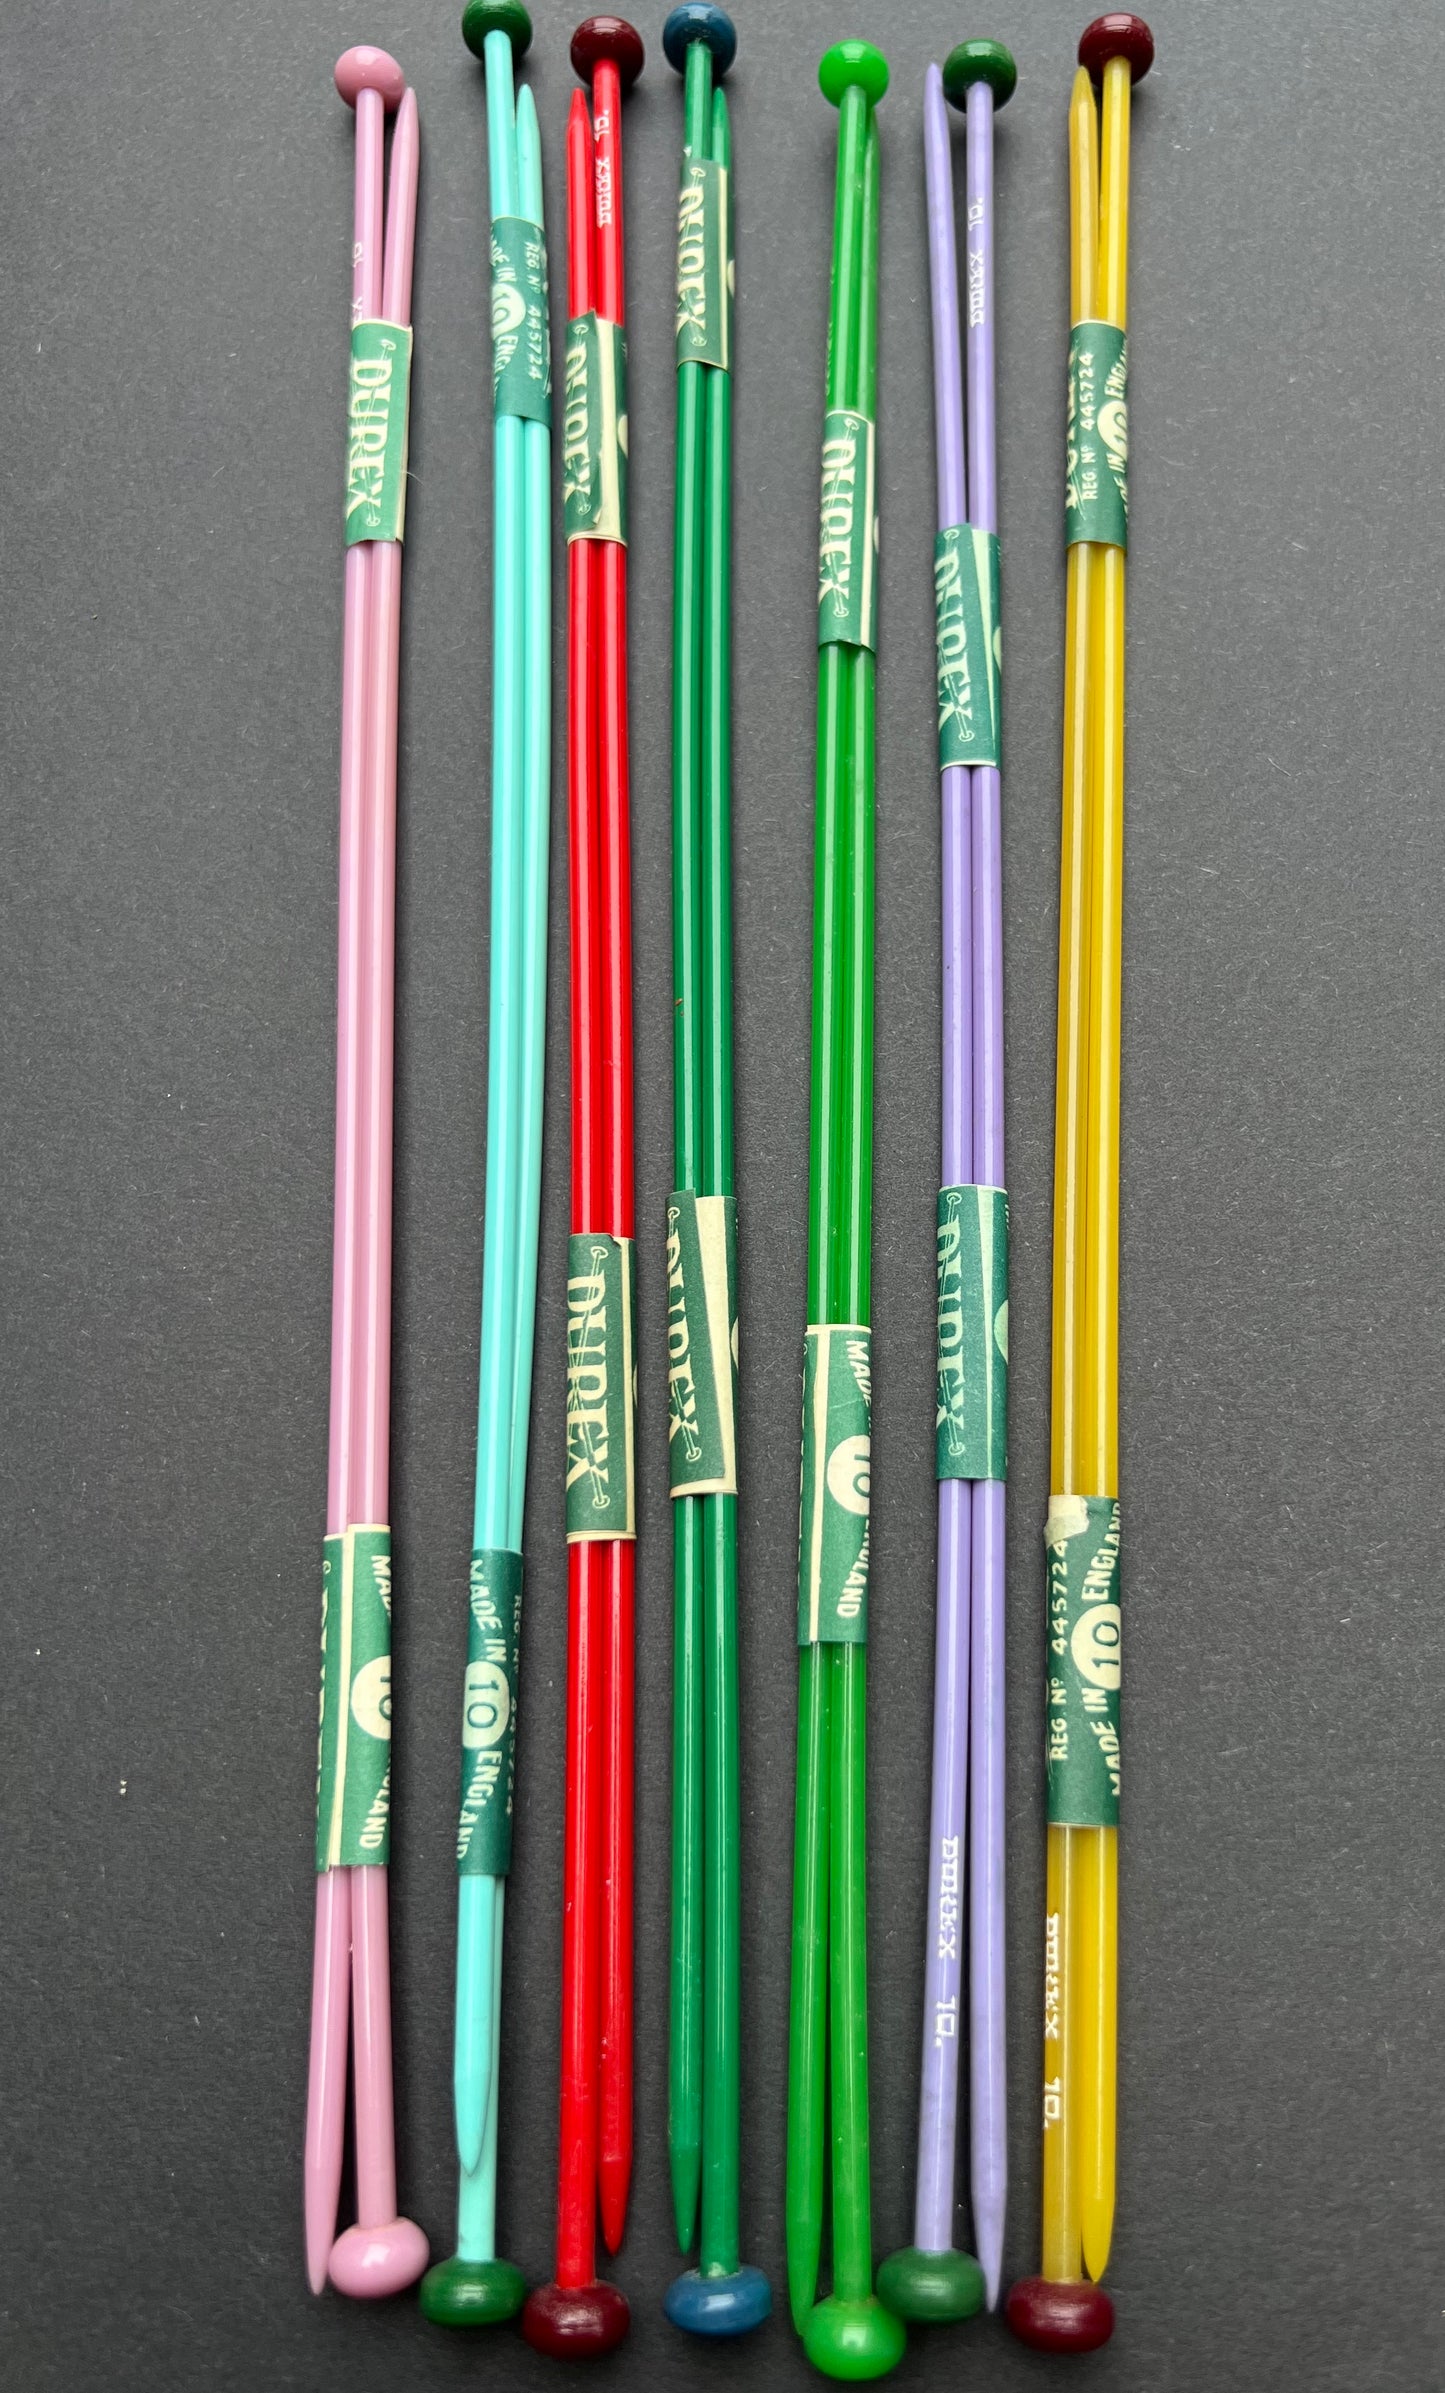 Pair of DUREX Gauge 10 (3.25mm) 10" Knitting Needles